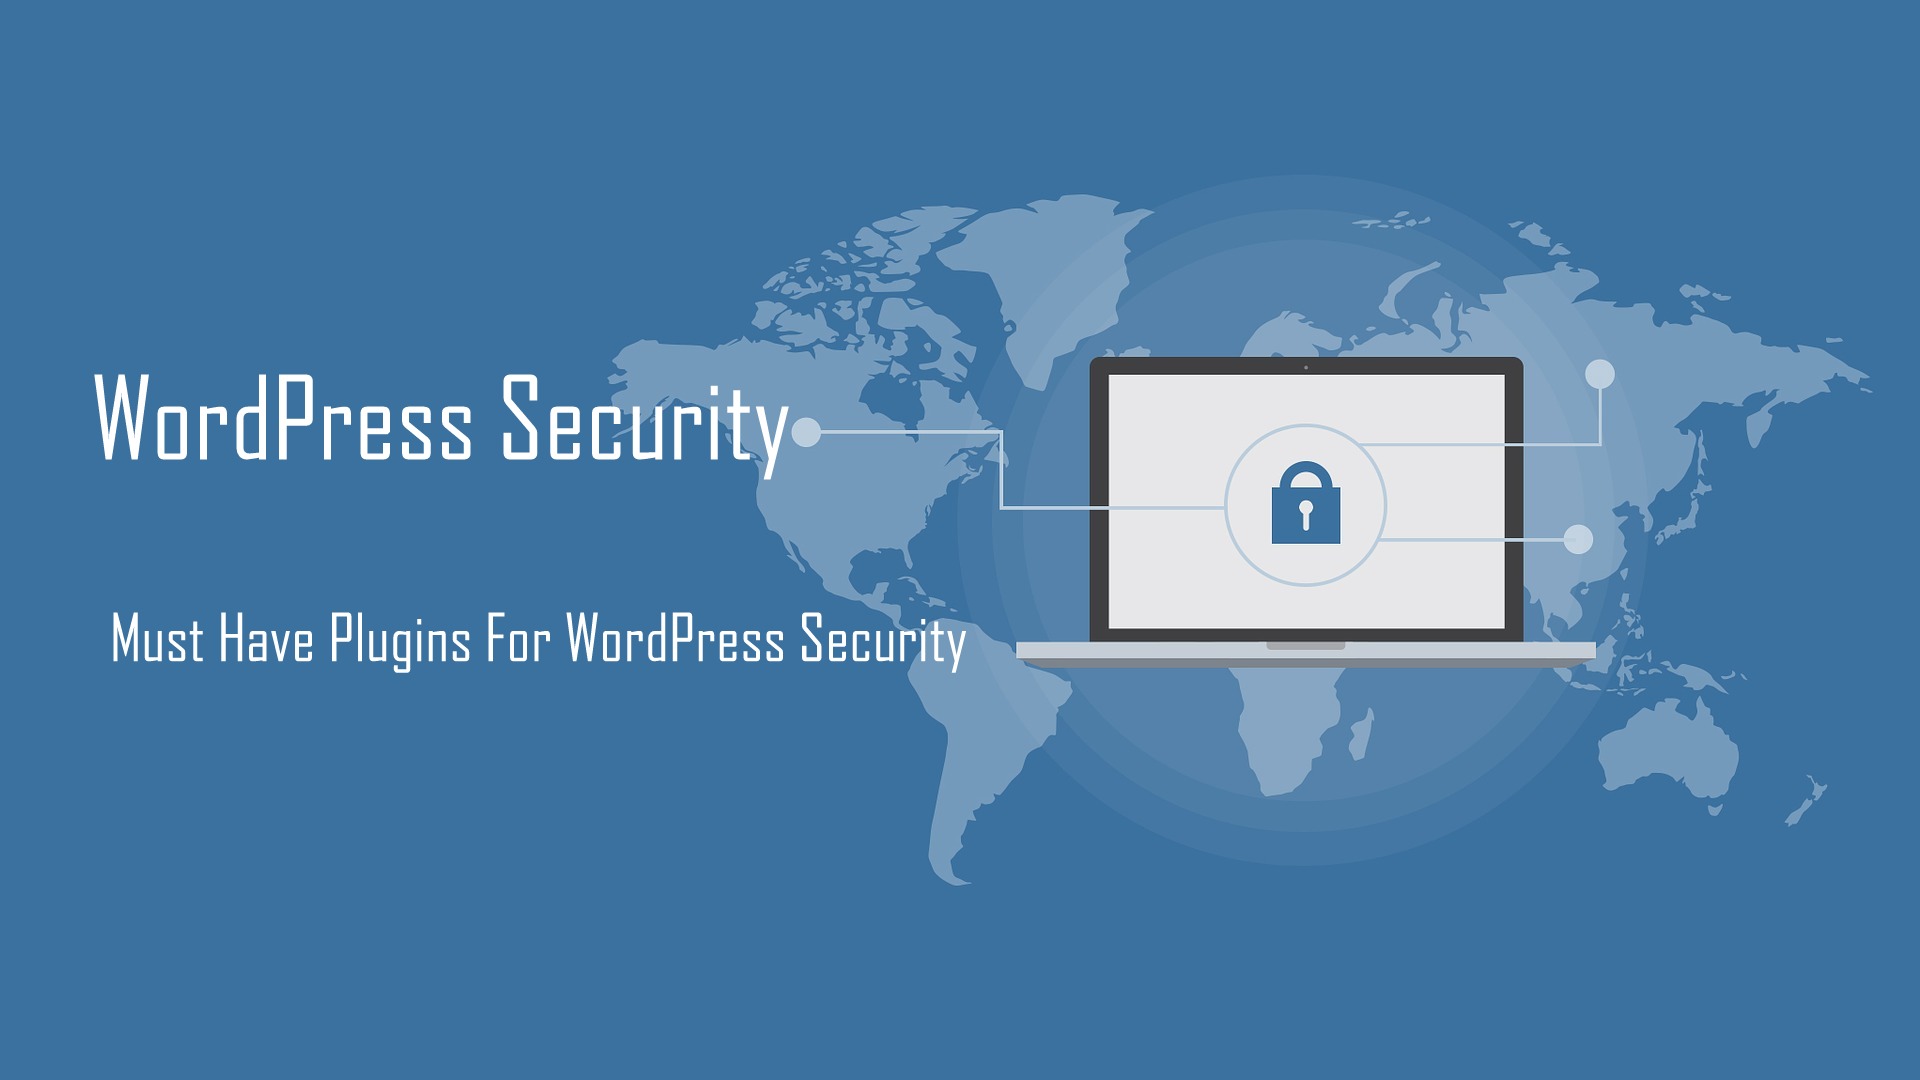 WordPress Security - Must Have Plugin For WordPress Security